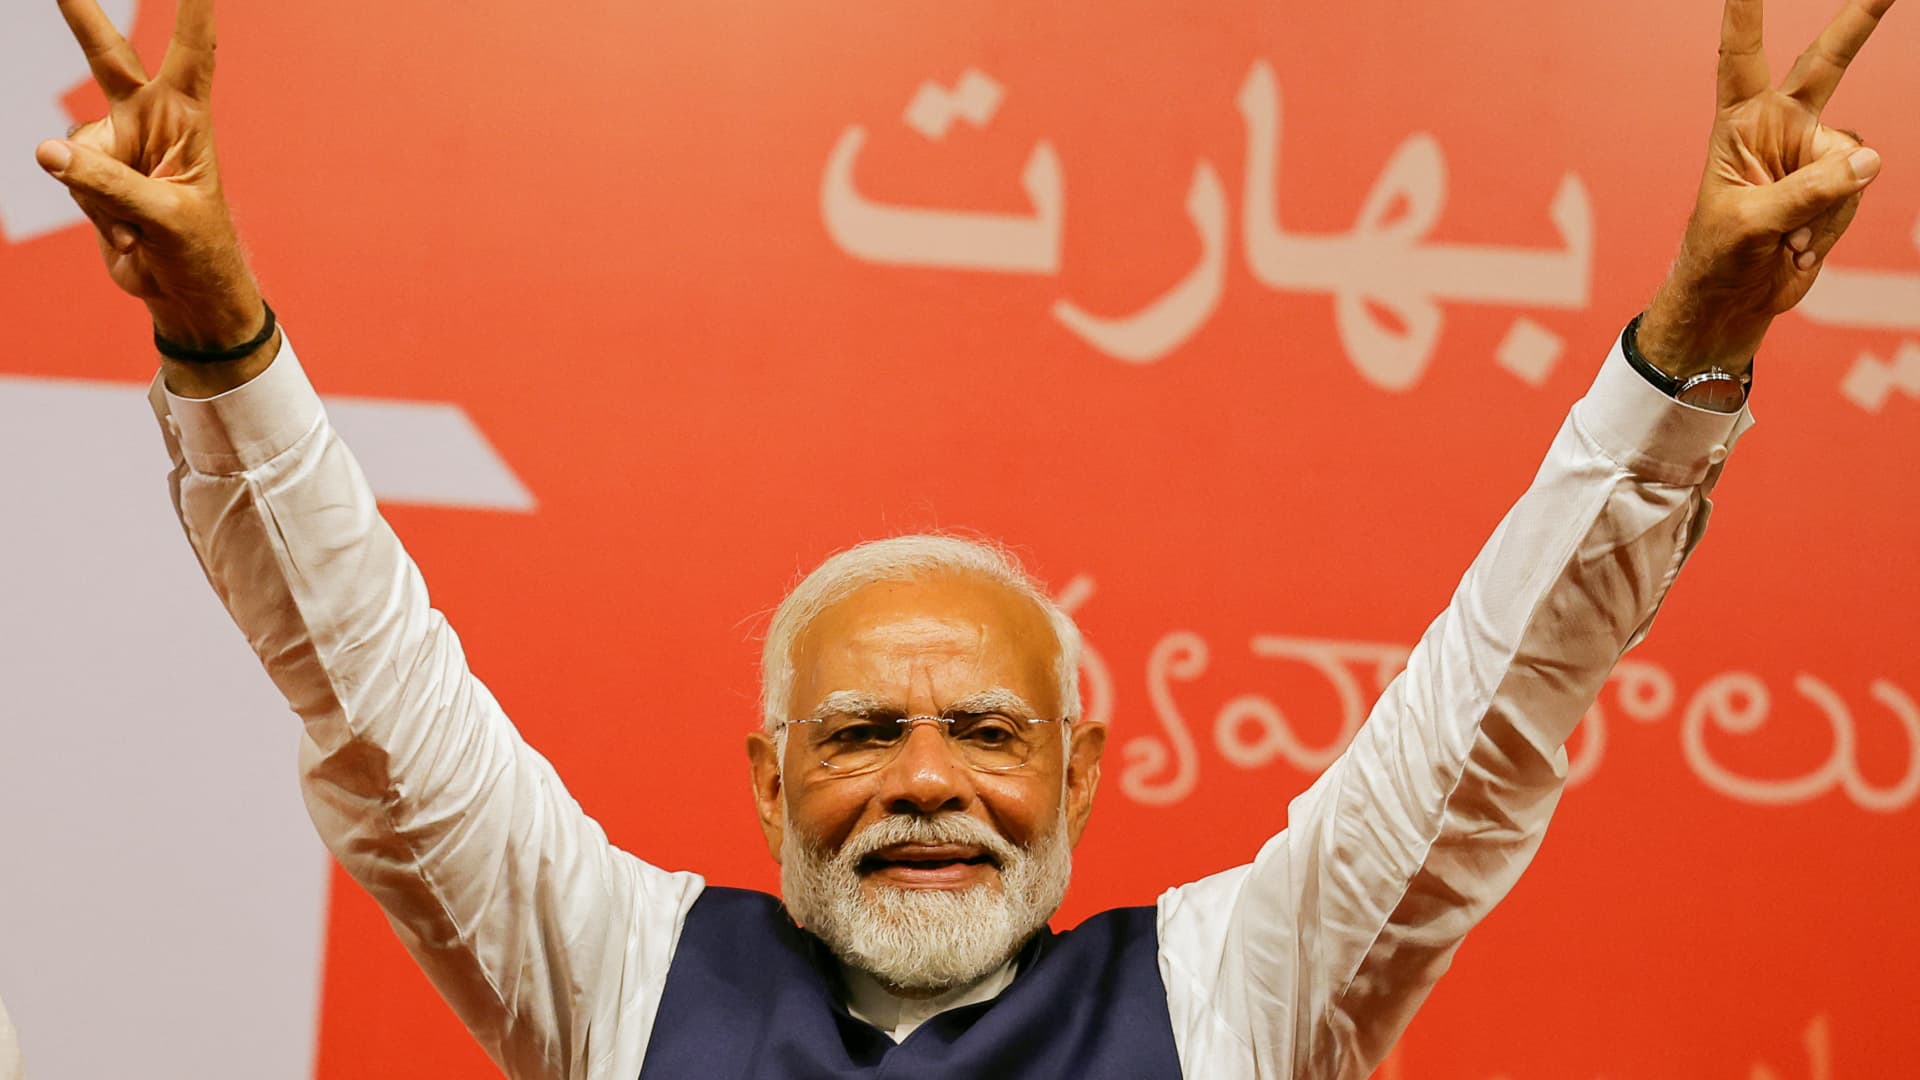 Indian Prime Minister Narendra Modi's election shortfall leaves Wall